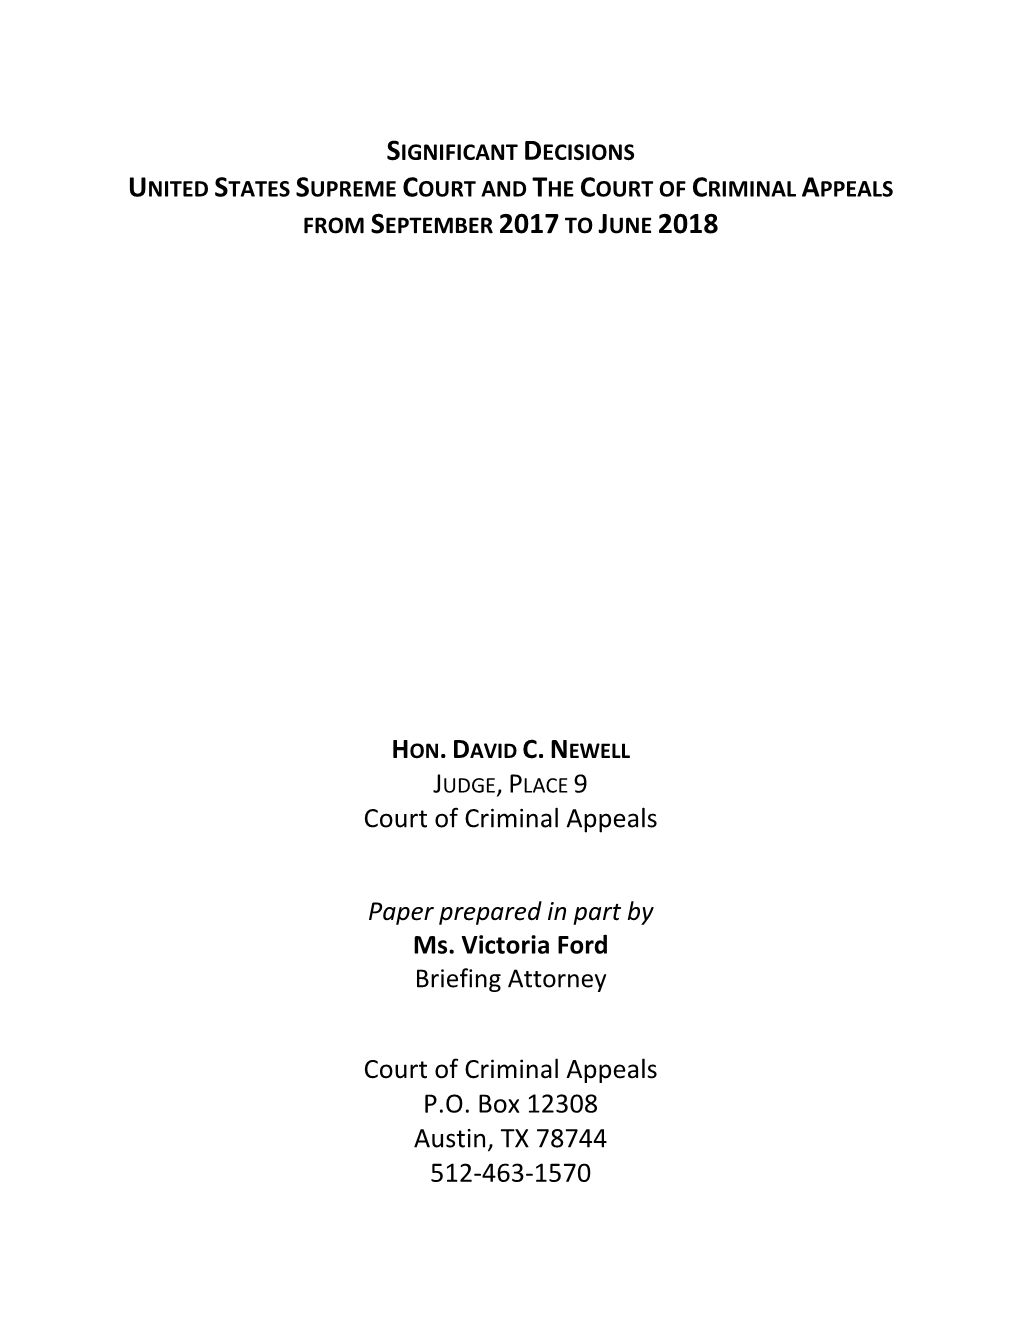 Court of Criminal Appeals Update 2017-2018